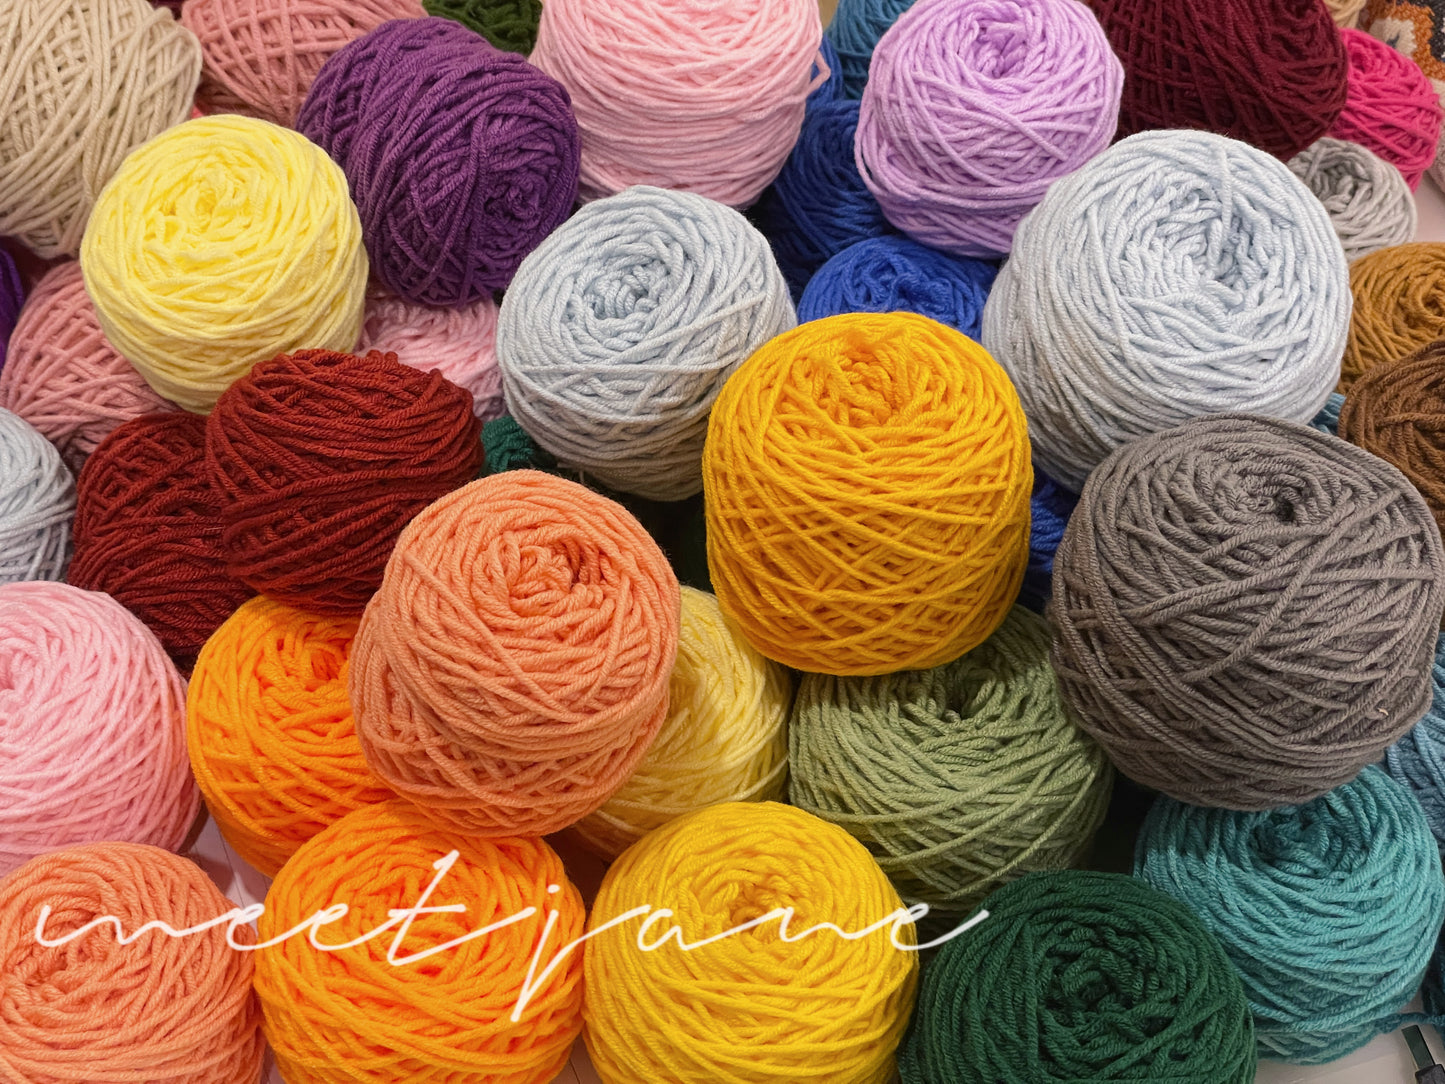 Crochet yarn|Milk cotton yarn|Soft Bliss|50g 4ply